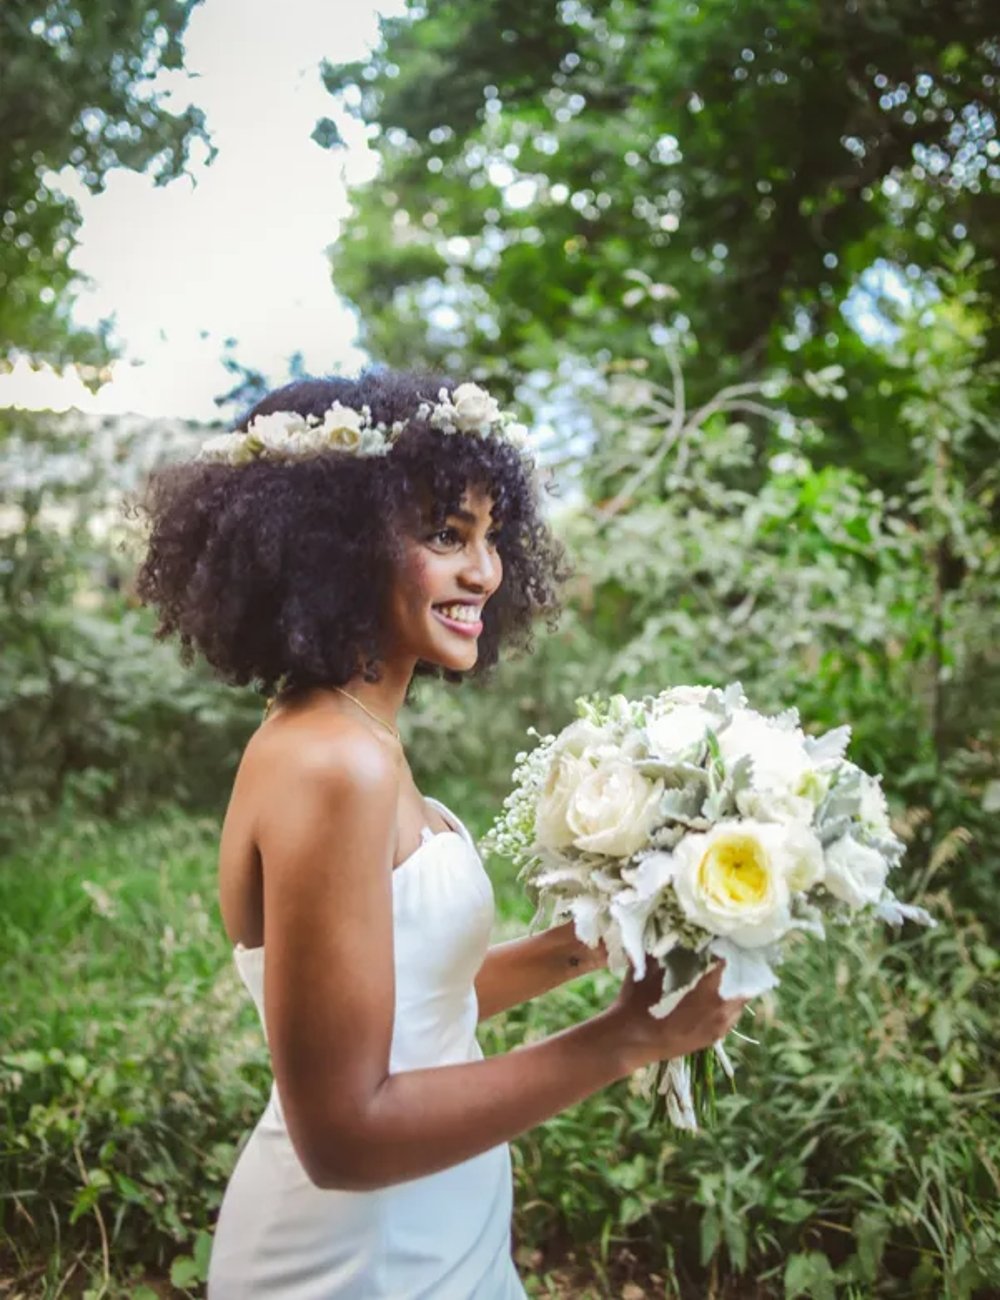 From The Hip Photo - cabelo solto com tiara - penteados de noiva - casamento - cabelo afro - https://stealthelook.com.br